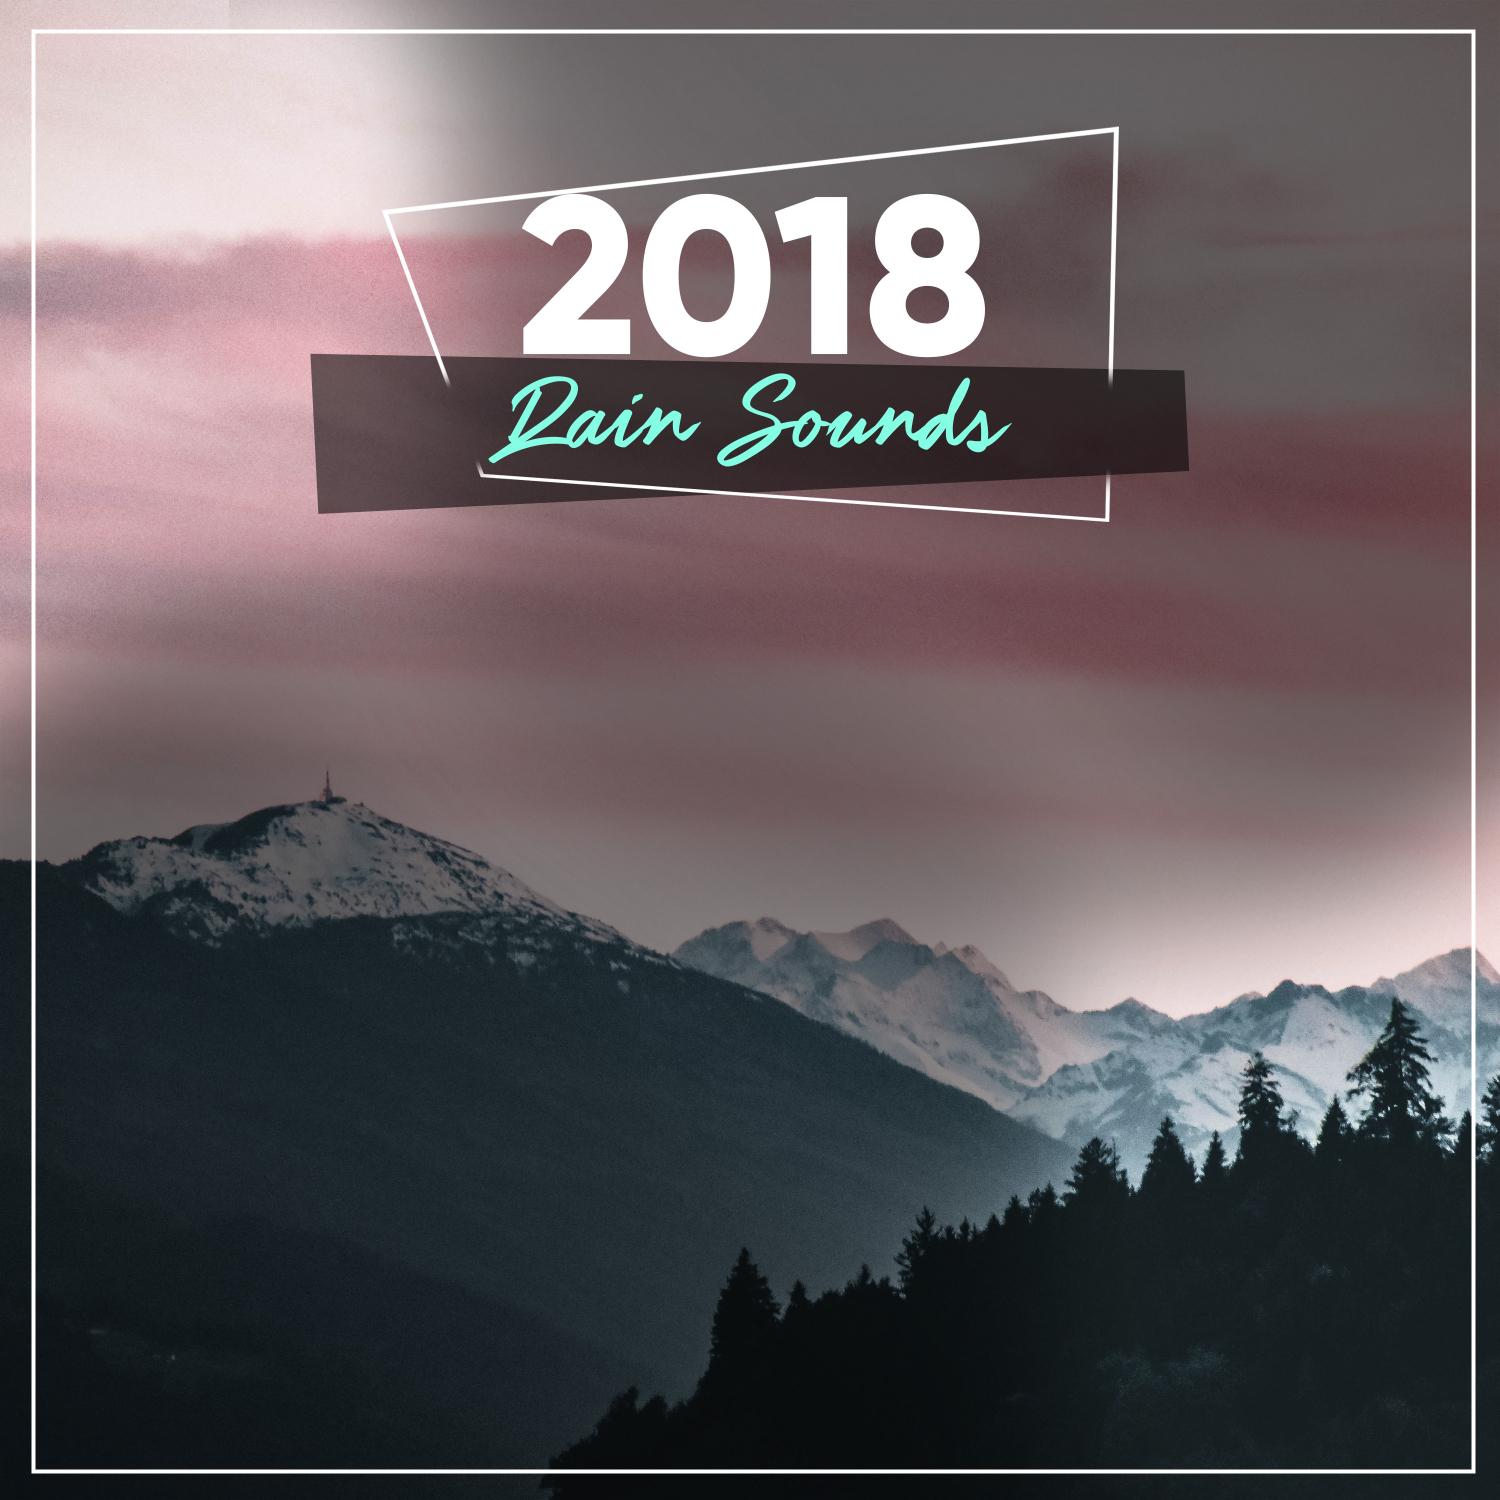 2018 Rain Sounds: Serene & Relaxing, Sleep, Spa or Study Music